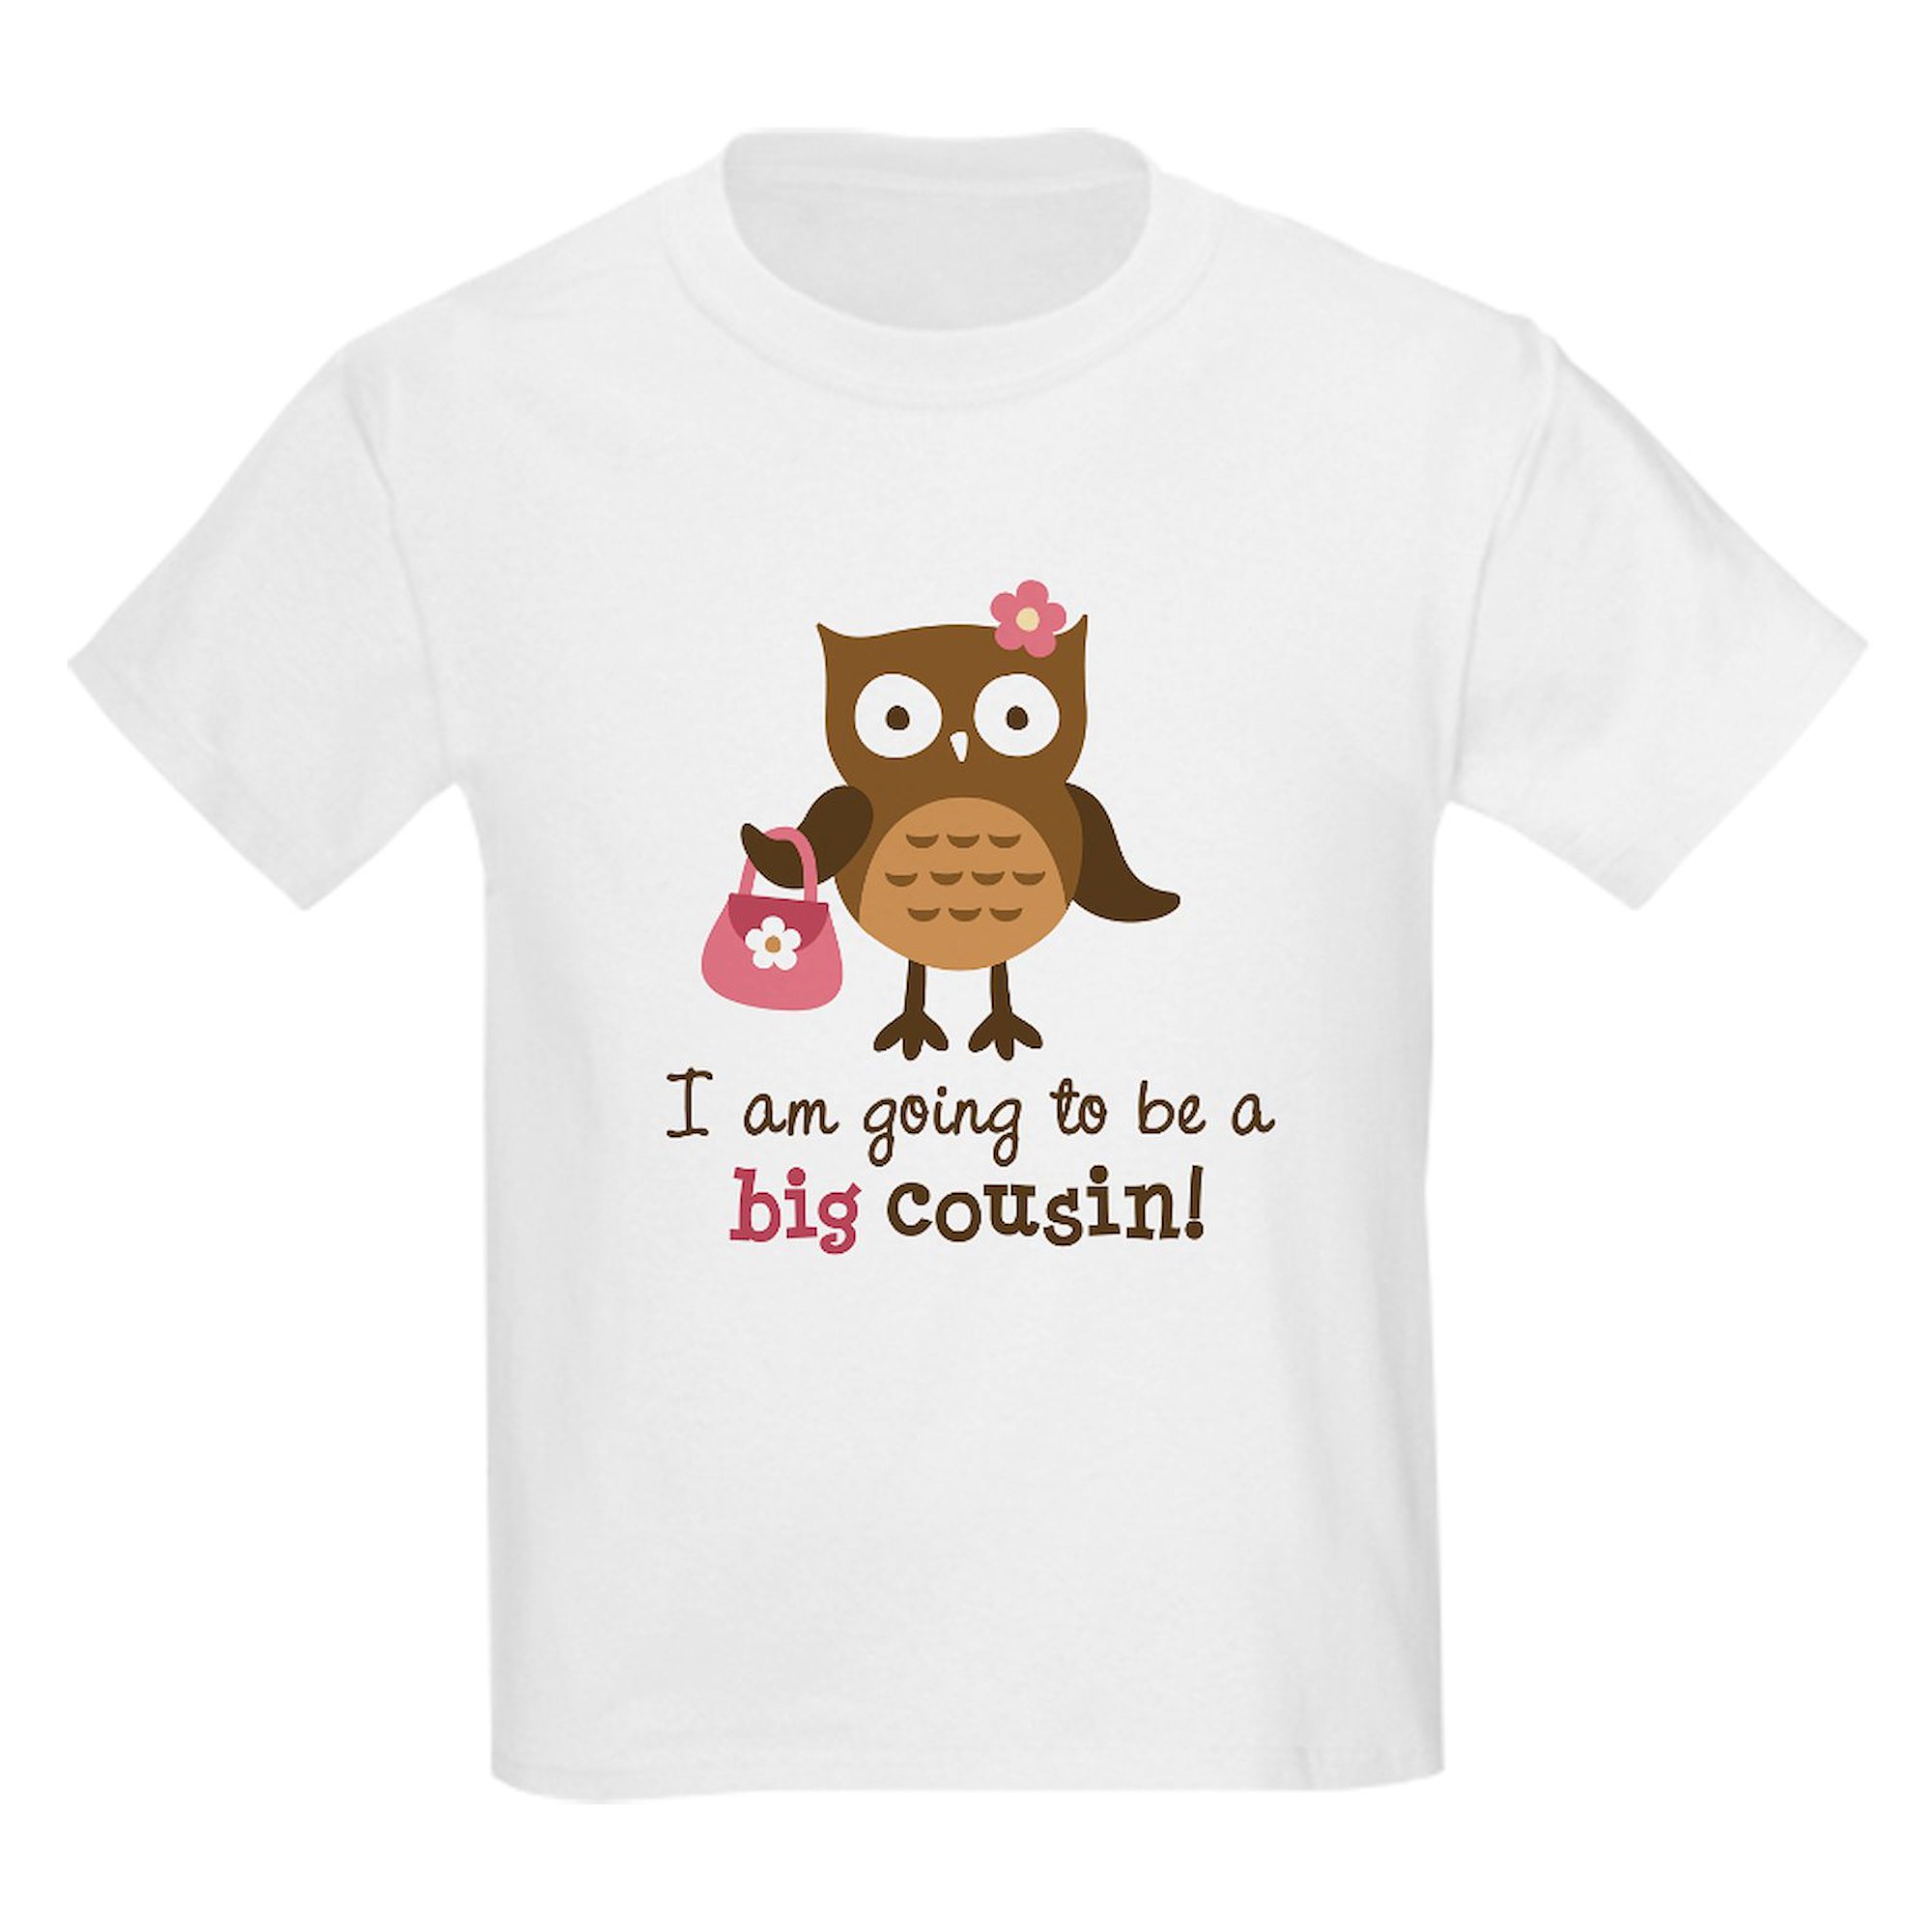 CafePress - Big Cousin To Be Mod Owl Kids Light T Shirt - Light T-Shirt Kids XS-XL - image 1 of 4